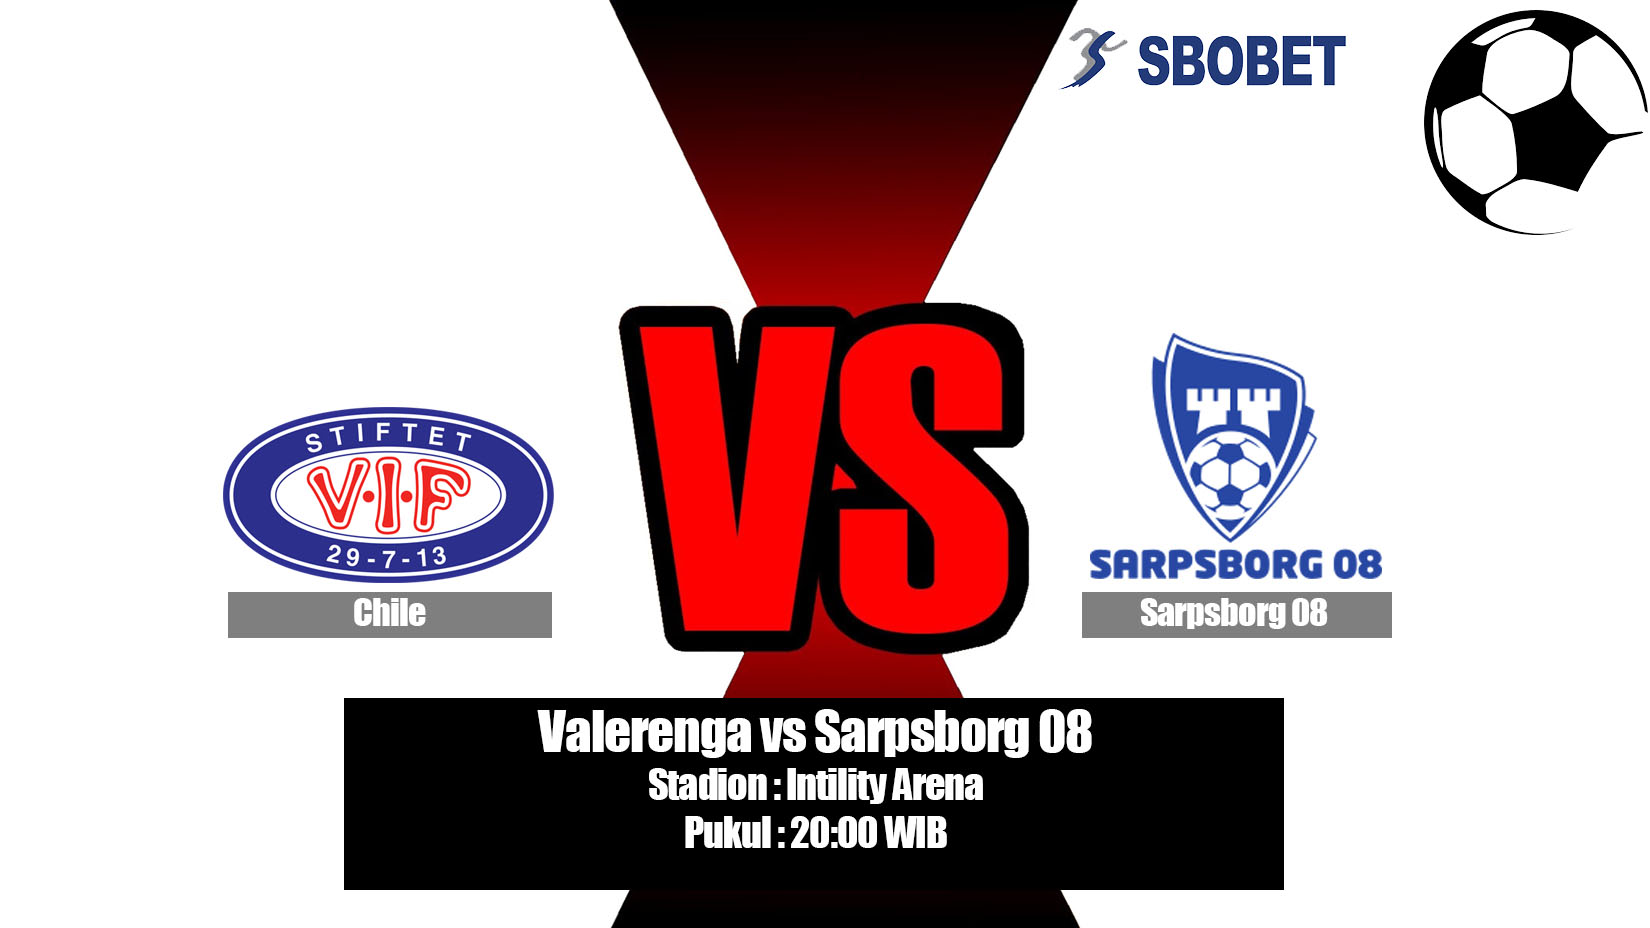 Prediksi Bola Valerenga vs Sarpsborg 08 23 Juni 2019